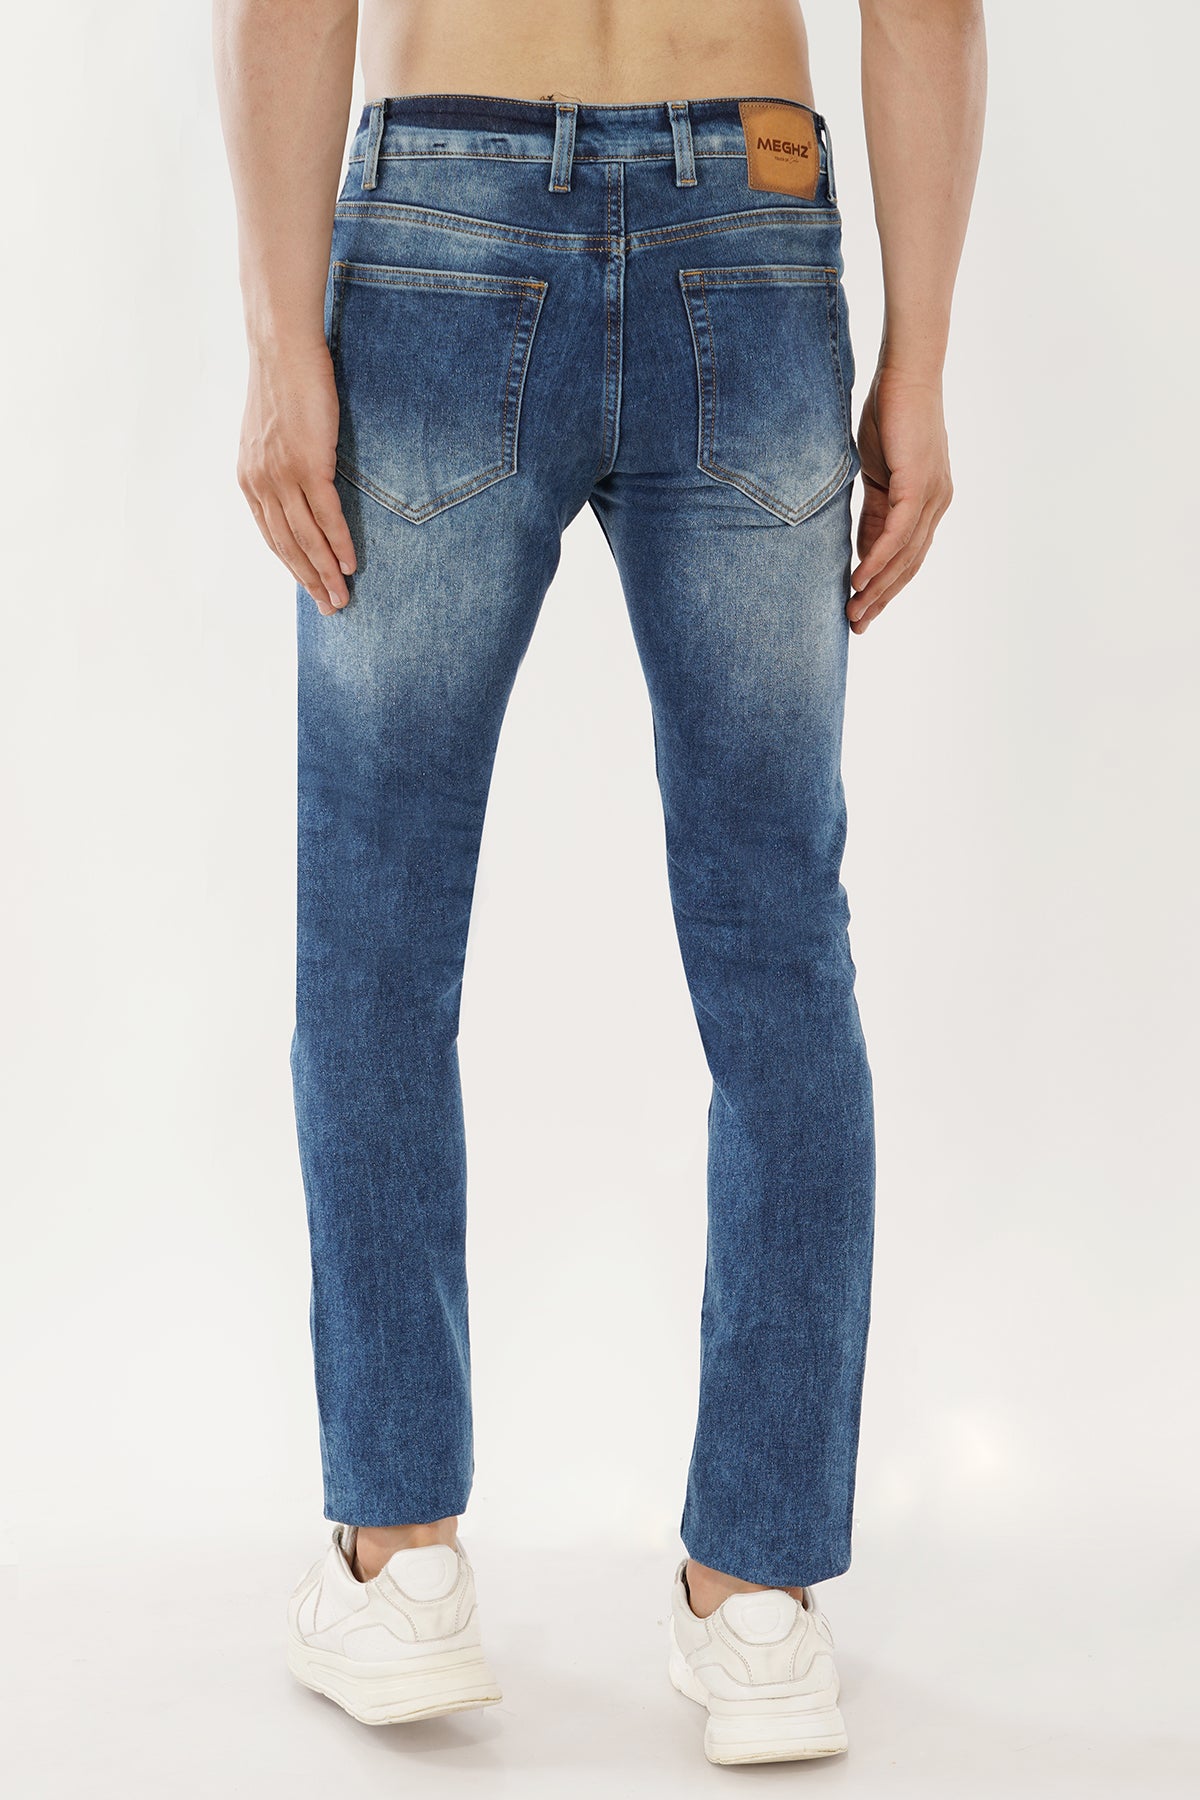 Men's Vintage Blue Slim Fit Jeans